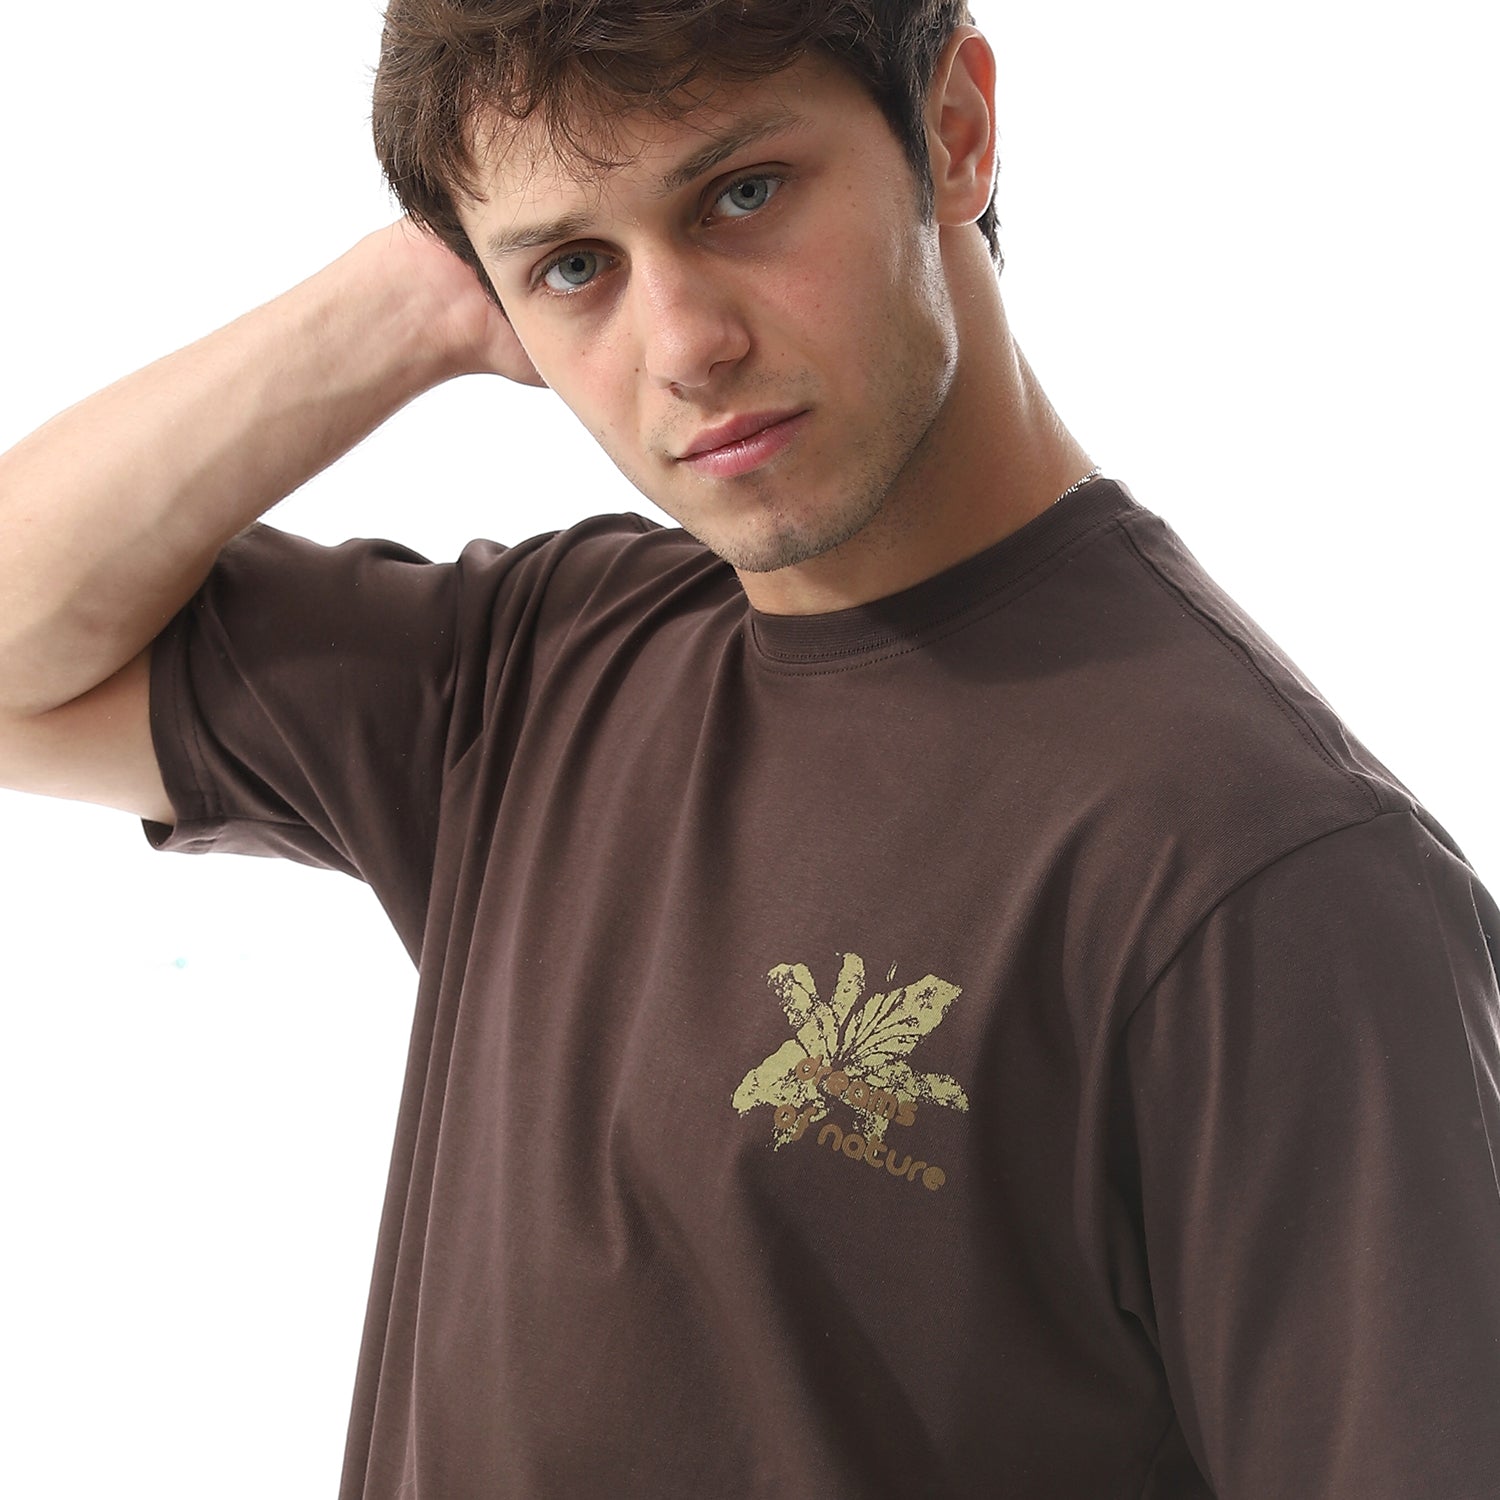 Men's Casual T-Shirt - Brown Short Sleeve Crew Neck Comfortable